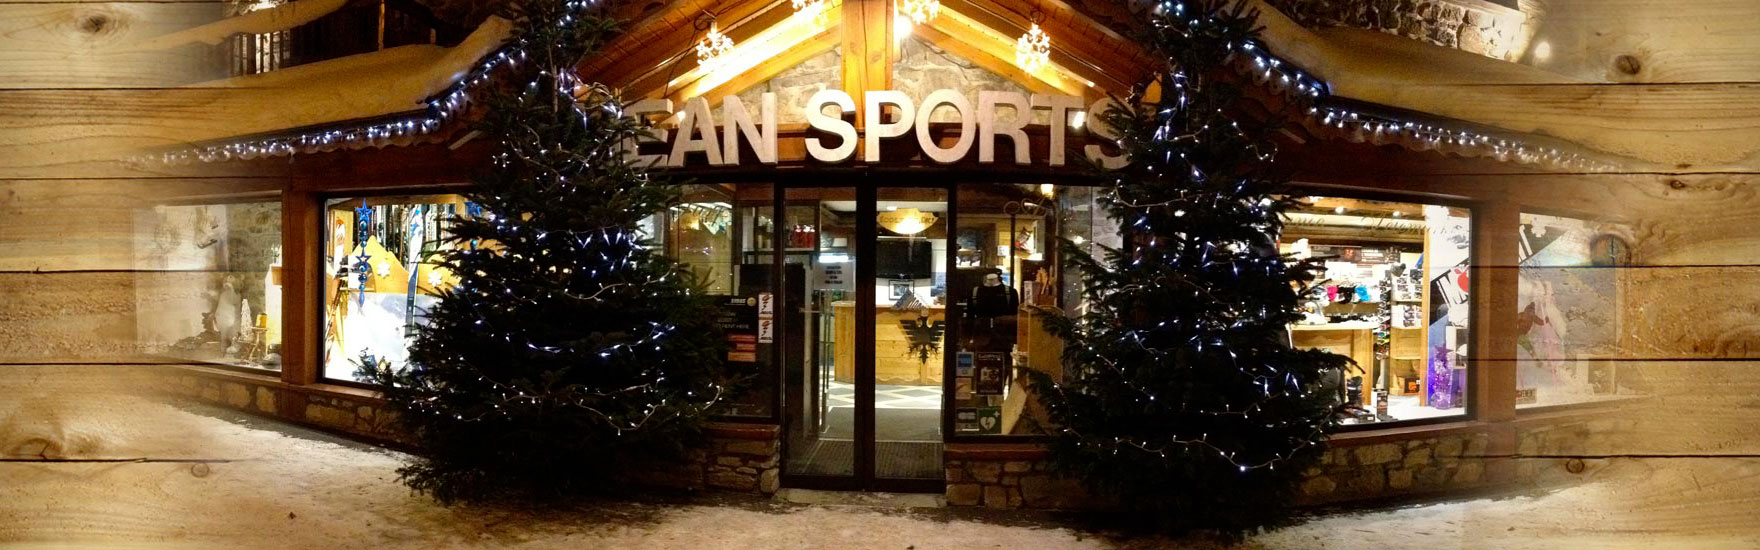 Jean Sports ski shop at Val-d'Isere